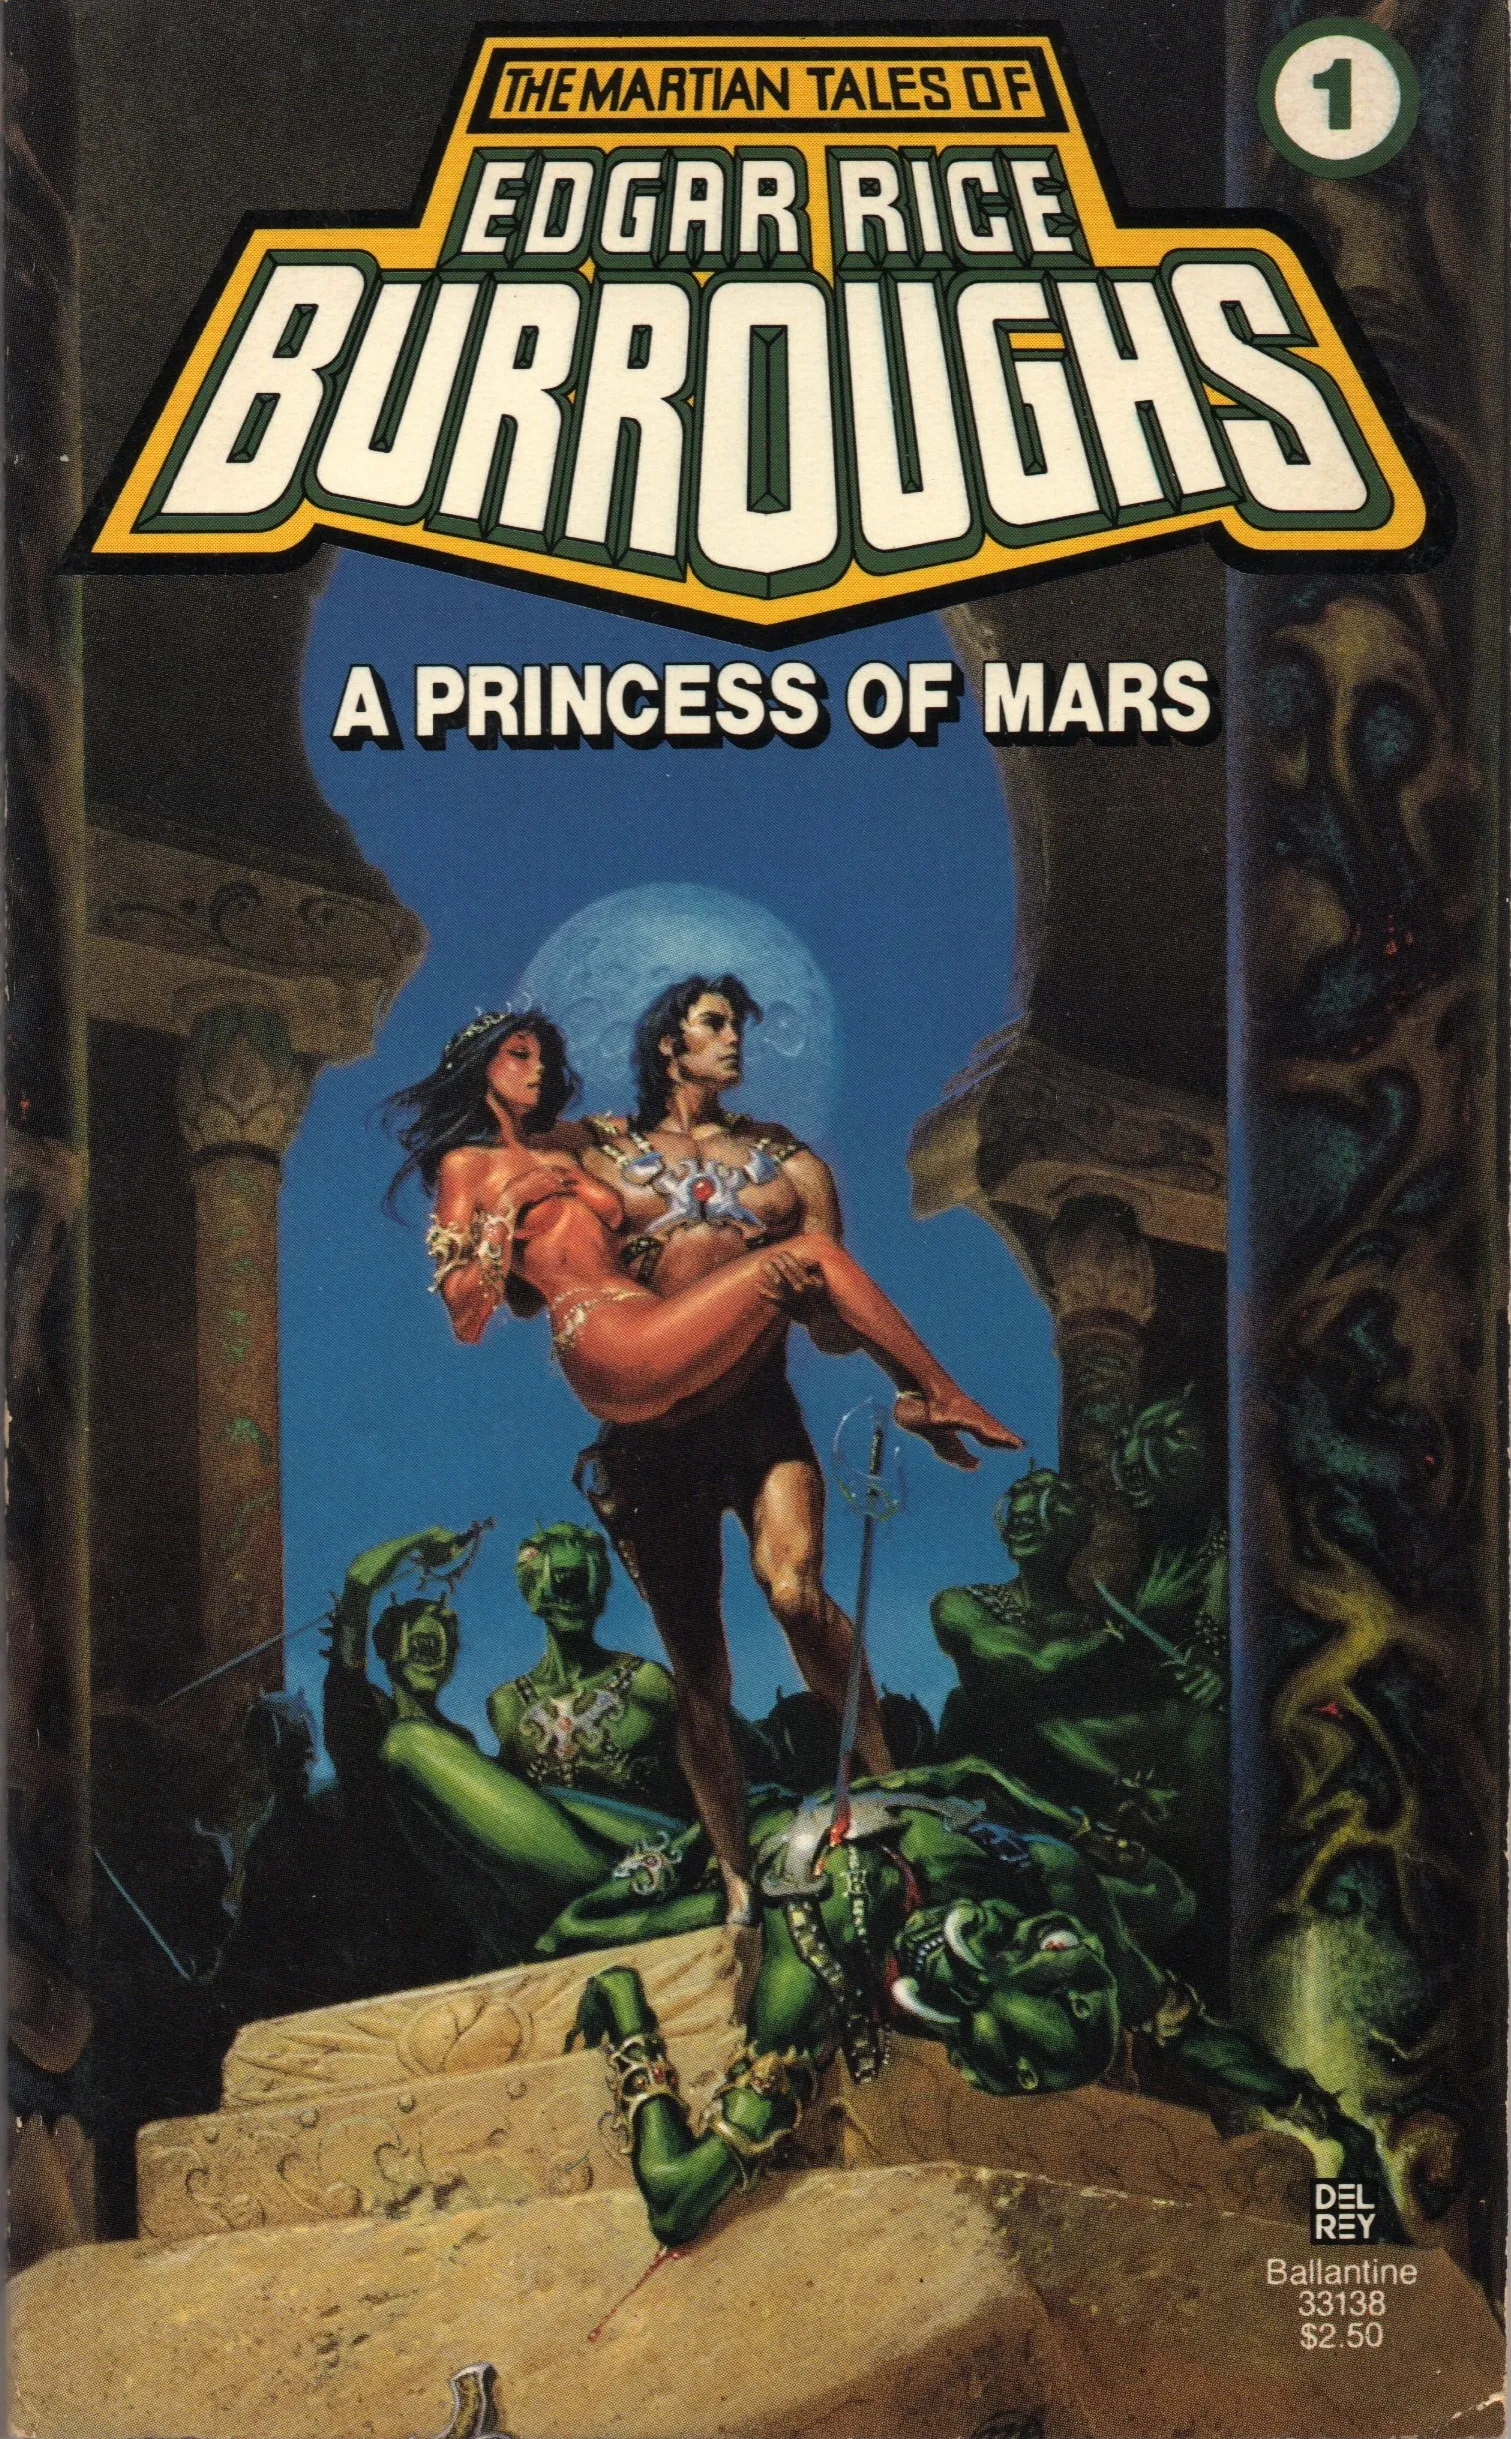 Обложка книги "Принцесса Марса"